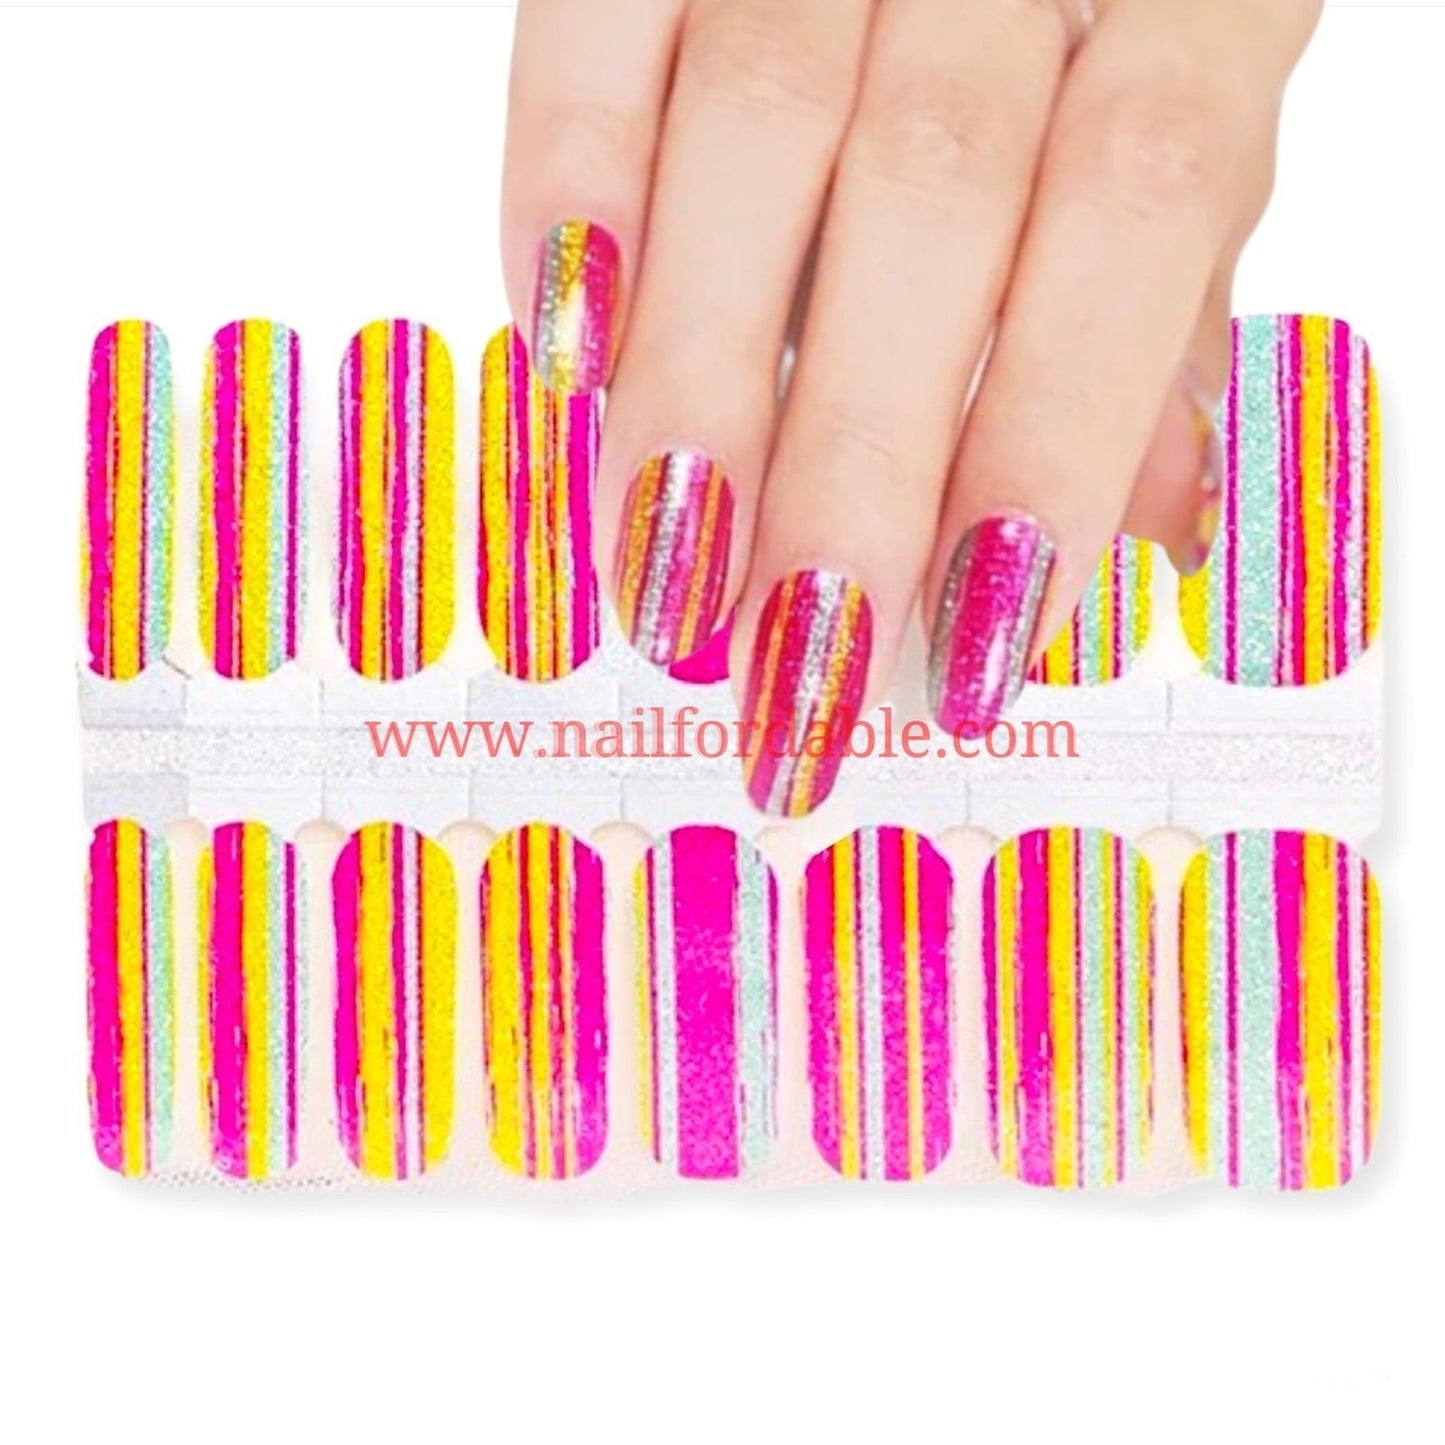 Rain of colors Nail Wraps | Semi Cured Gel Wraps | Gel Nail Wraps |Nail Polish | Nail Stickers